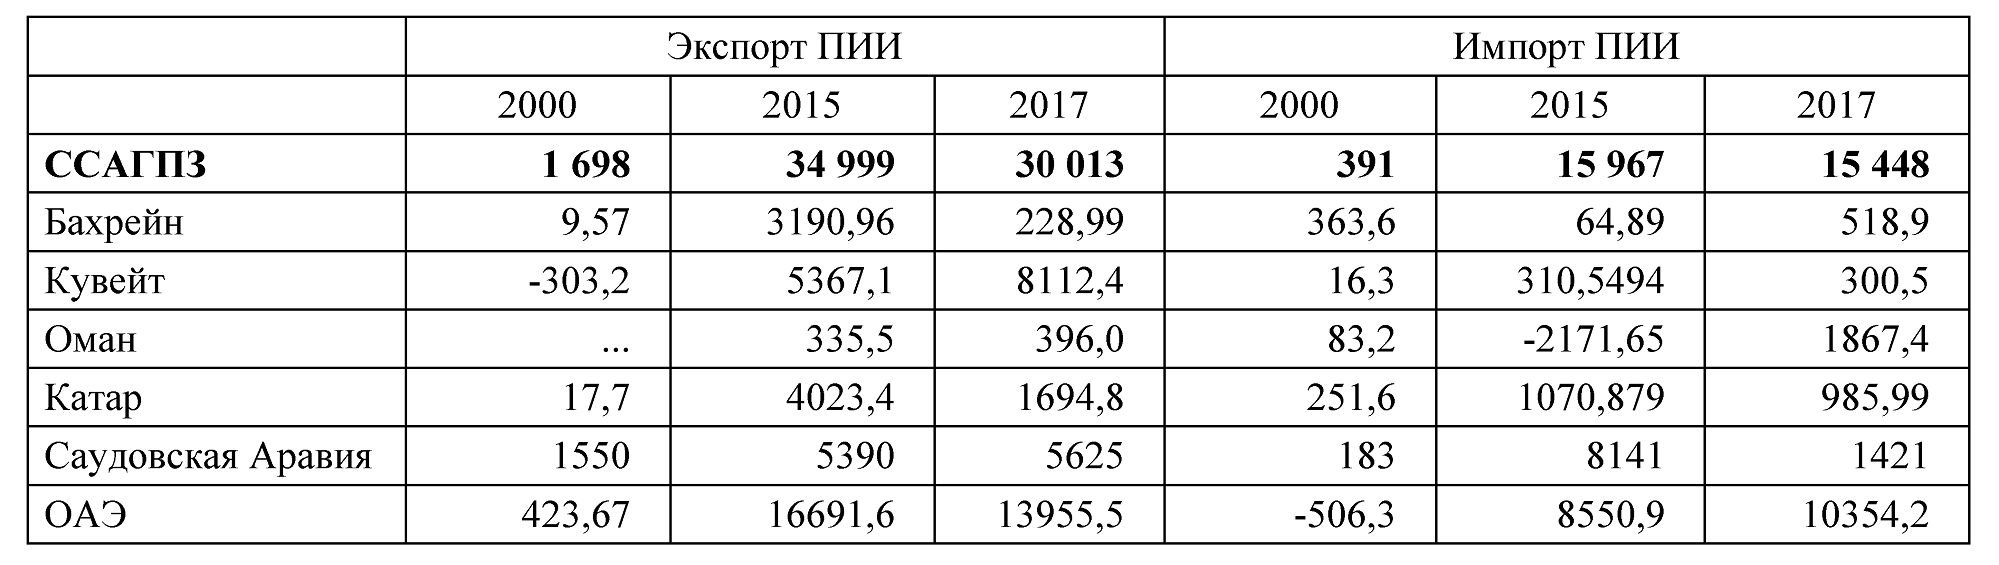 Таблица 2. Динамика экспорта и импорта ПИИ ($ млн)